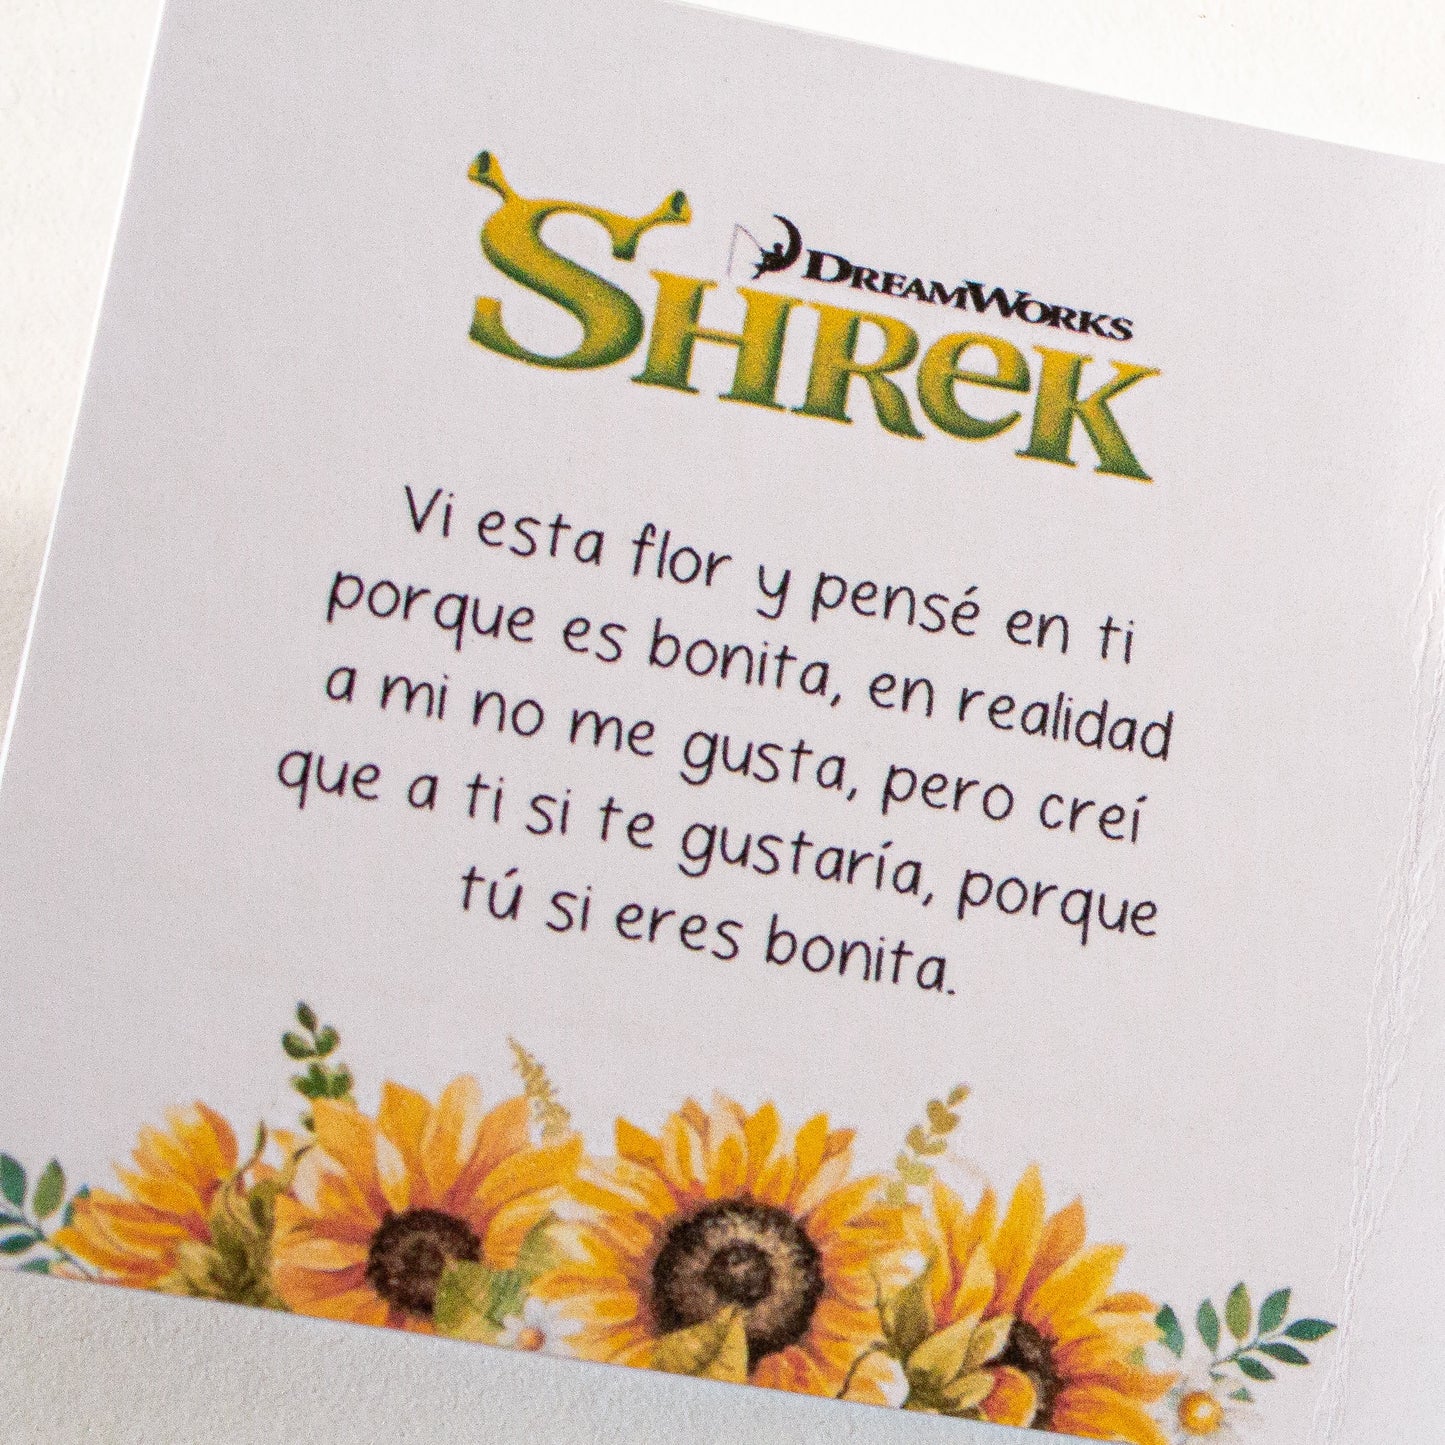 Cadena de Girasol Shrek 2